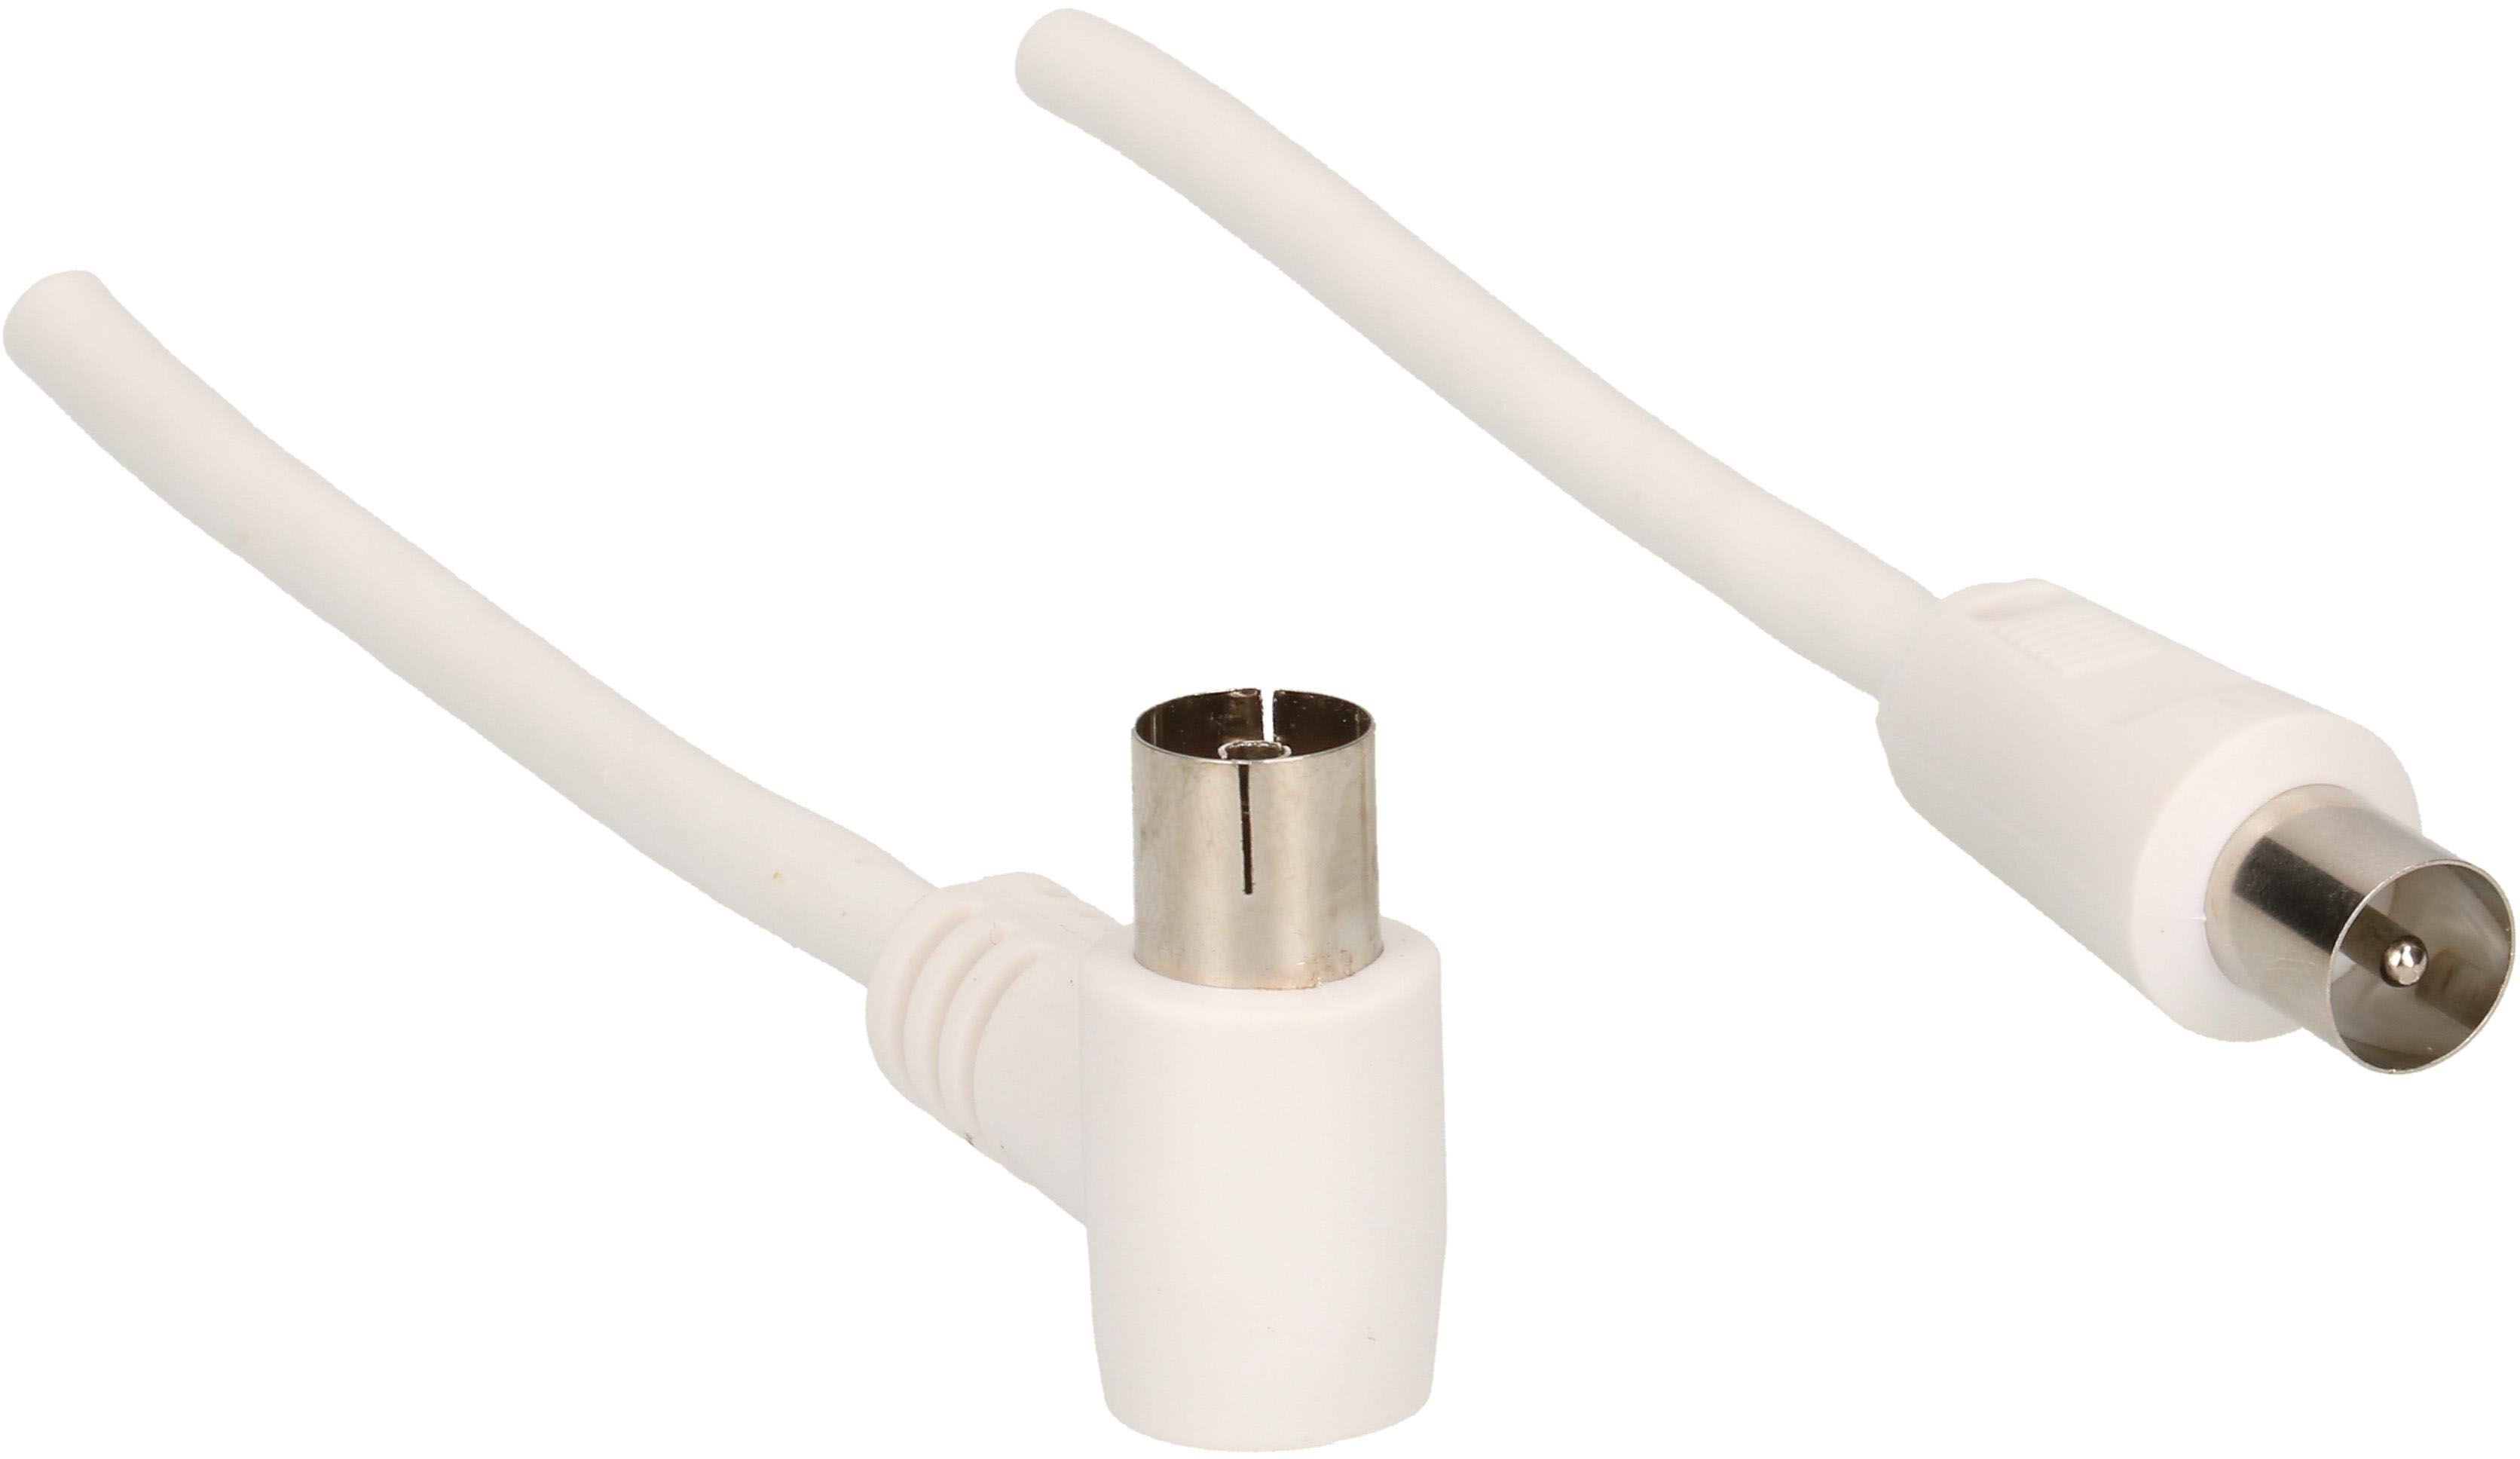 câble de raccordement IEC équerre 75dB 1.5m blanc